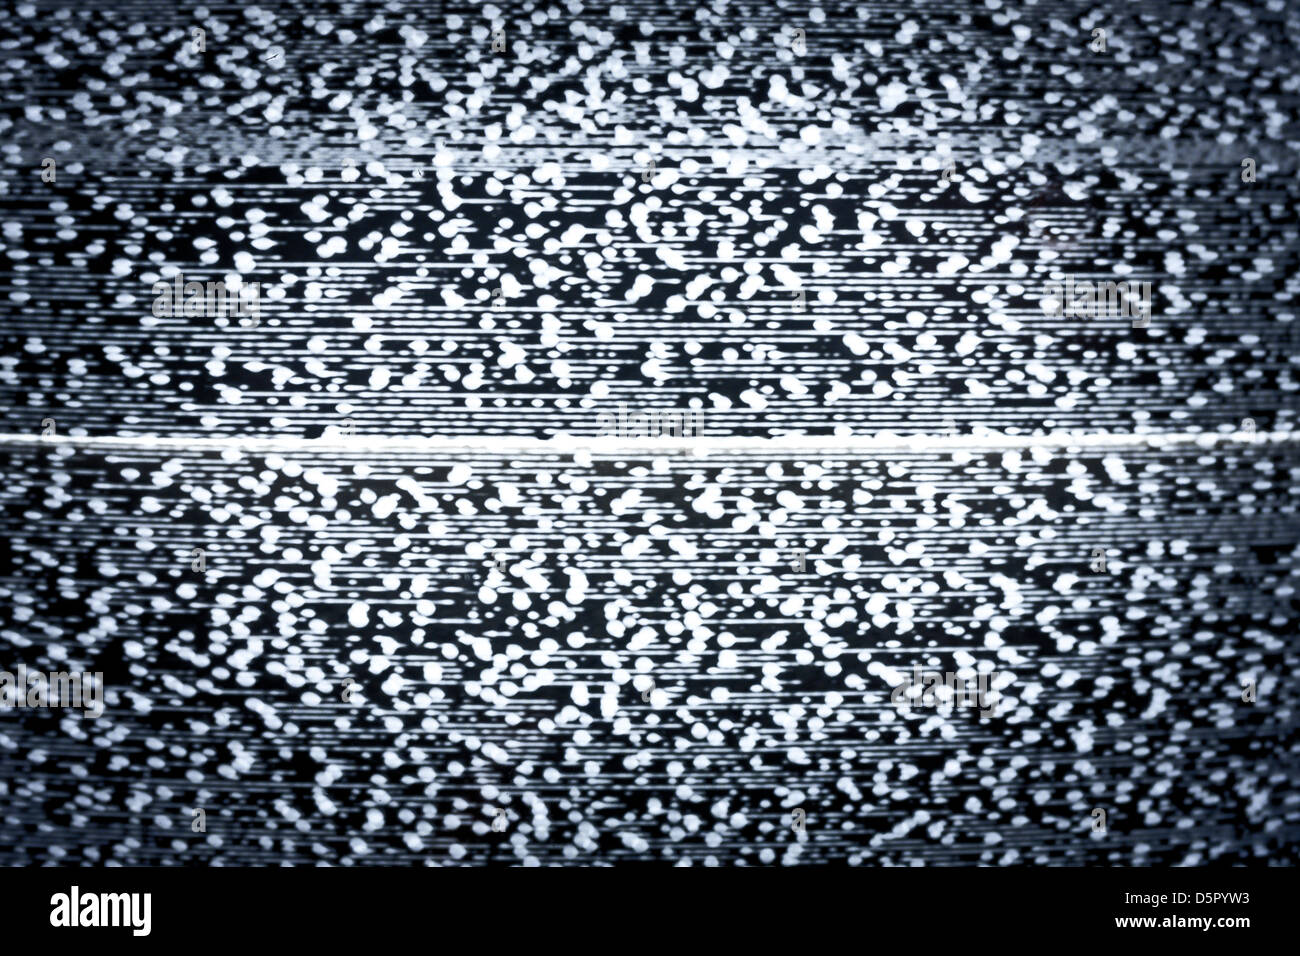 Analog television with white noise Stock Photo